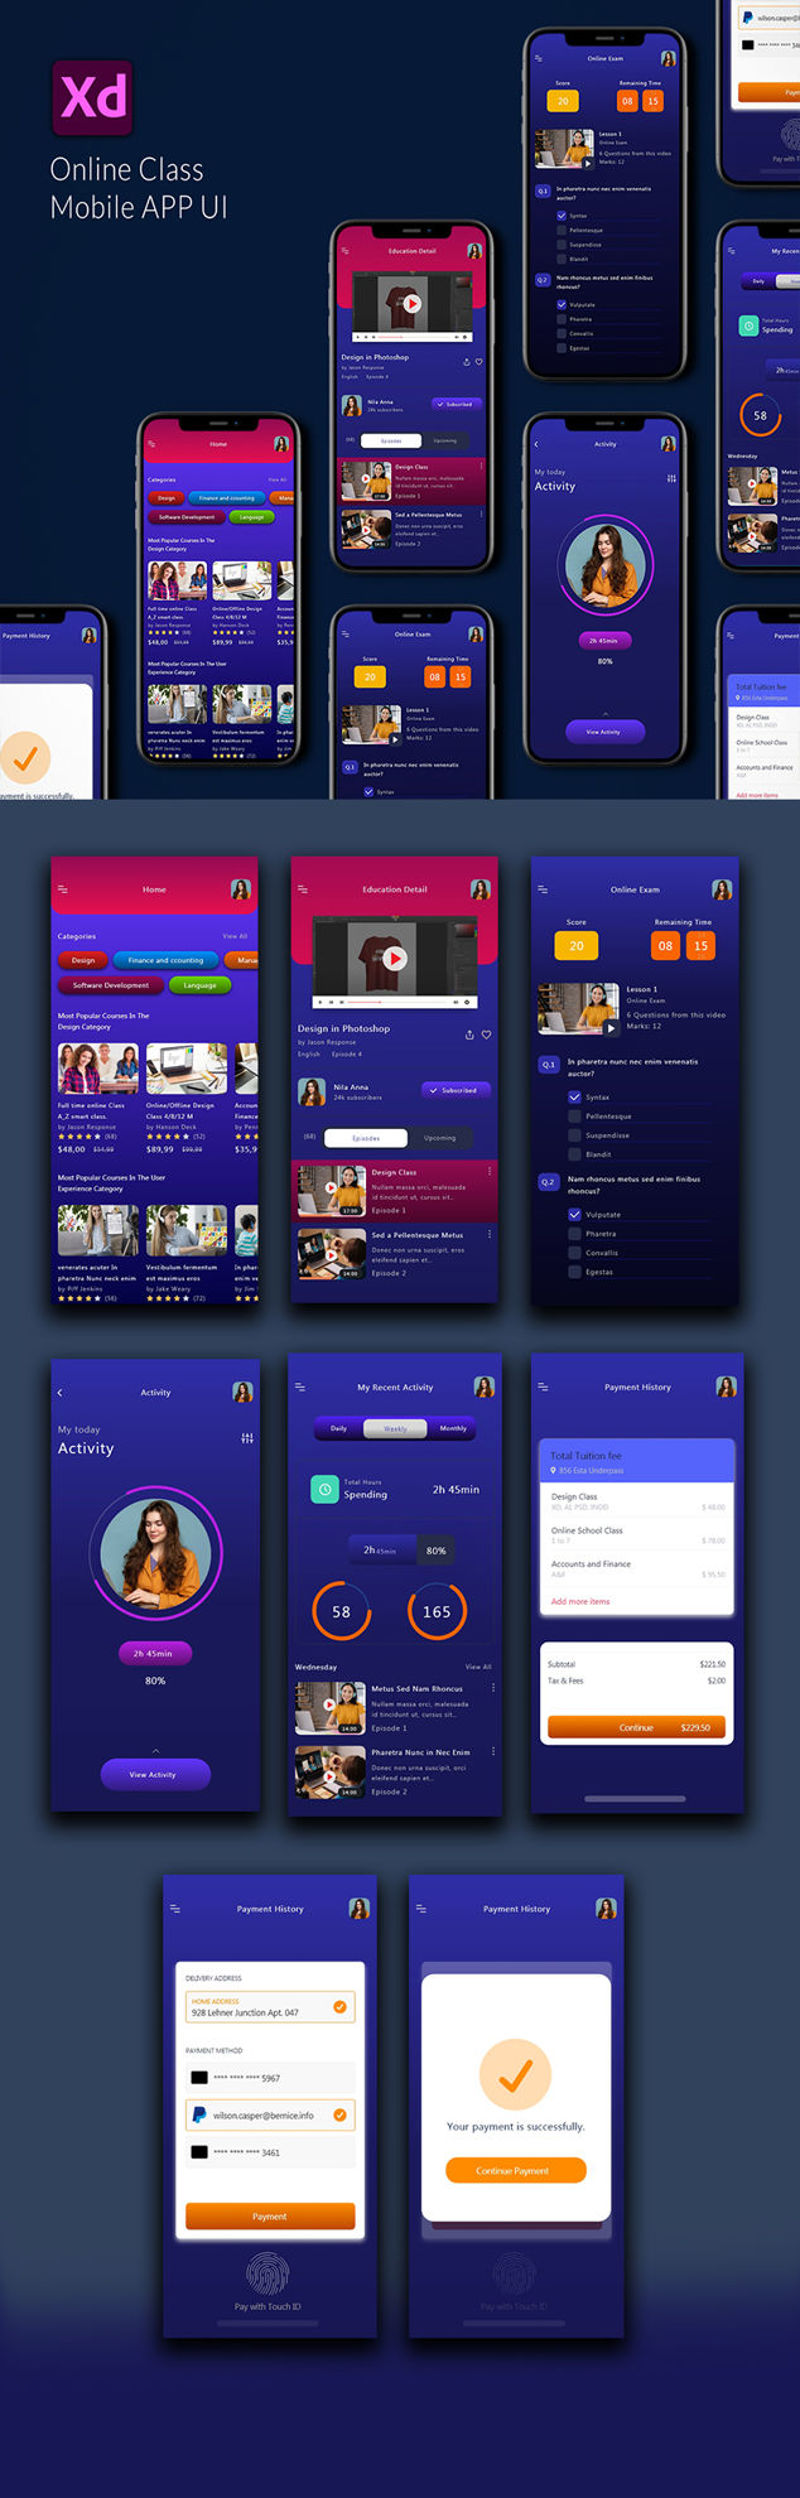 Online Class-Mobile App UI